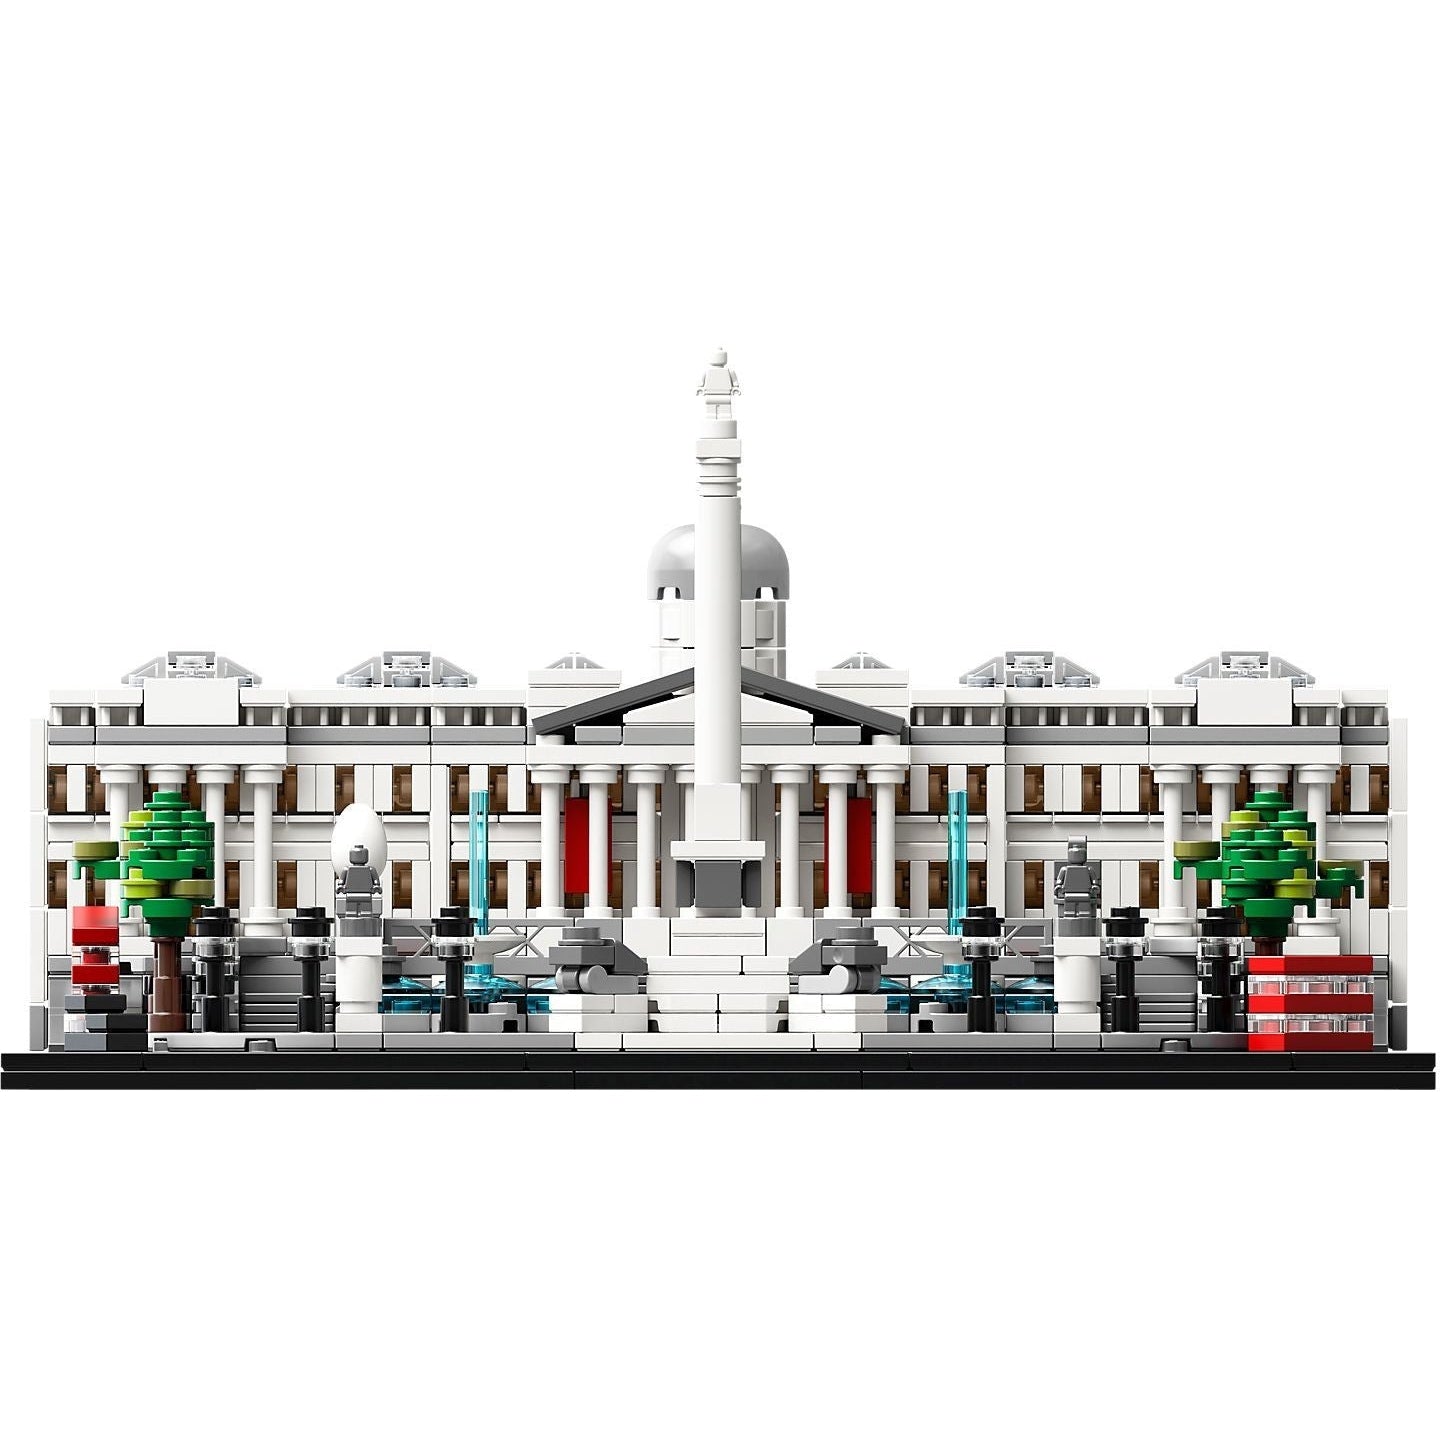 LEGO 21045 Architecture Trafalgar Square